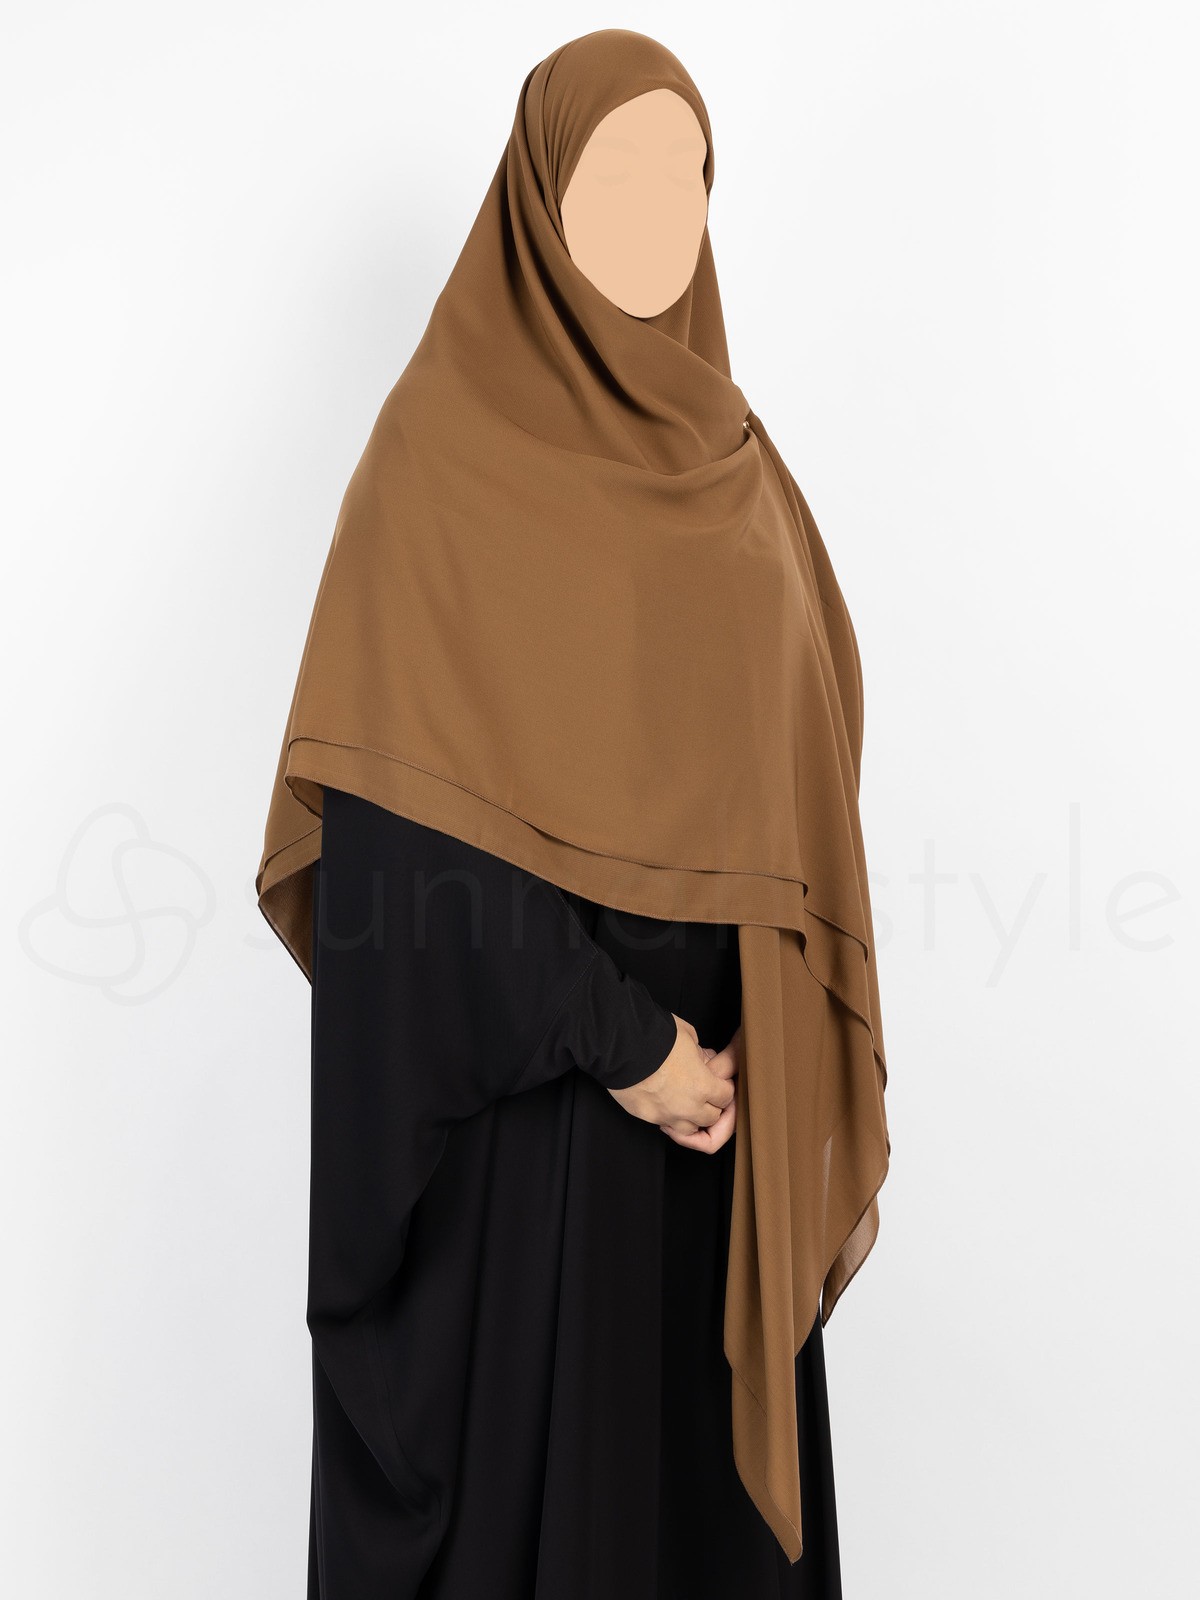 Sunnah Style - Essentials Square Hijab - XL (Caramel)